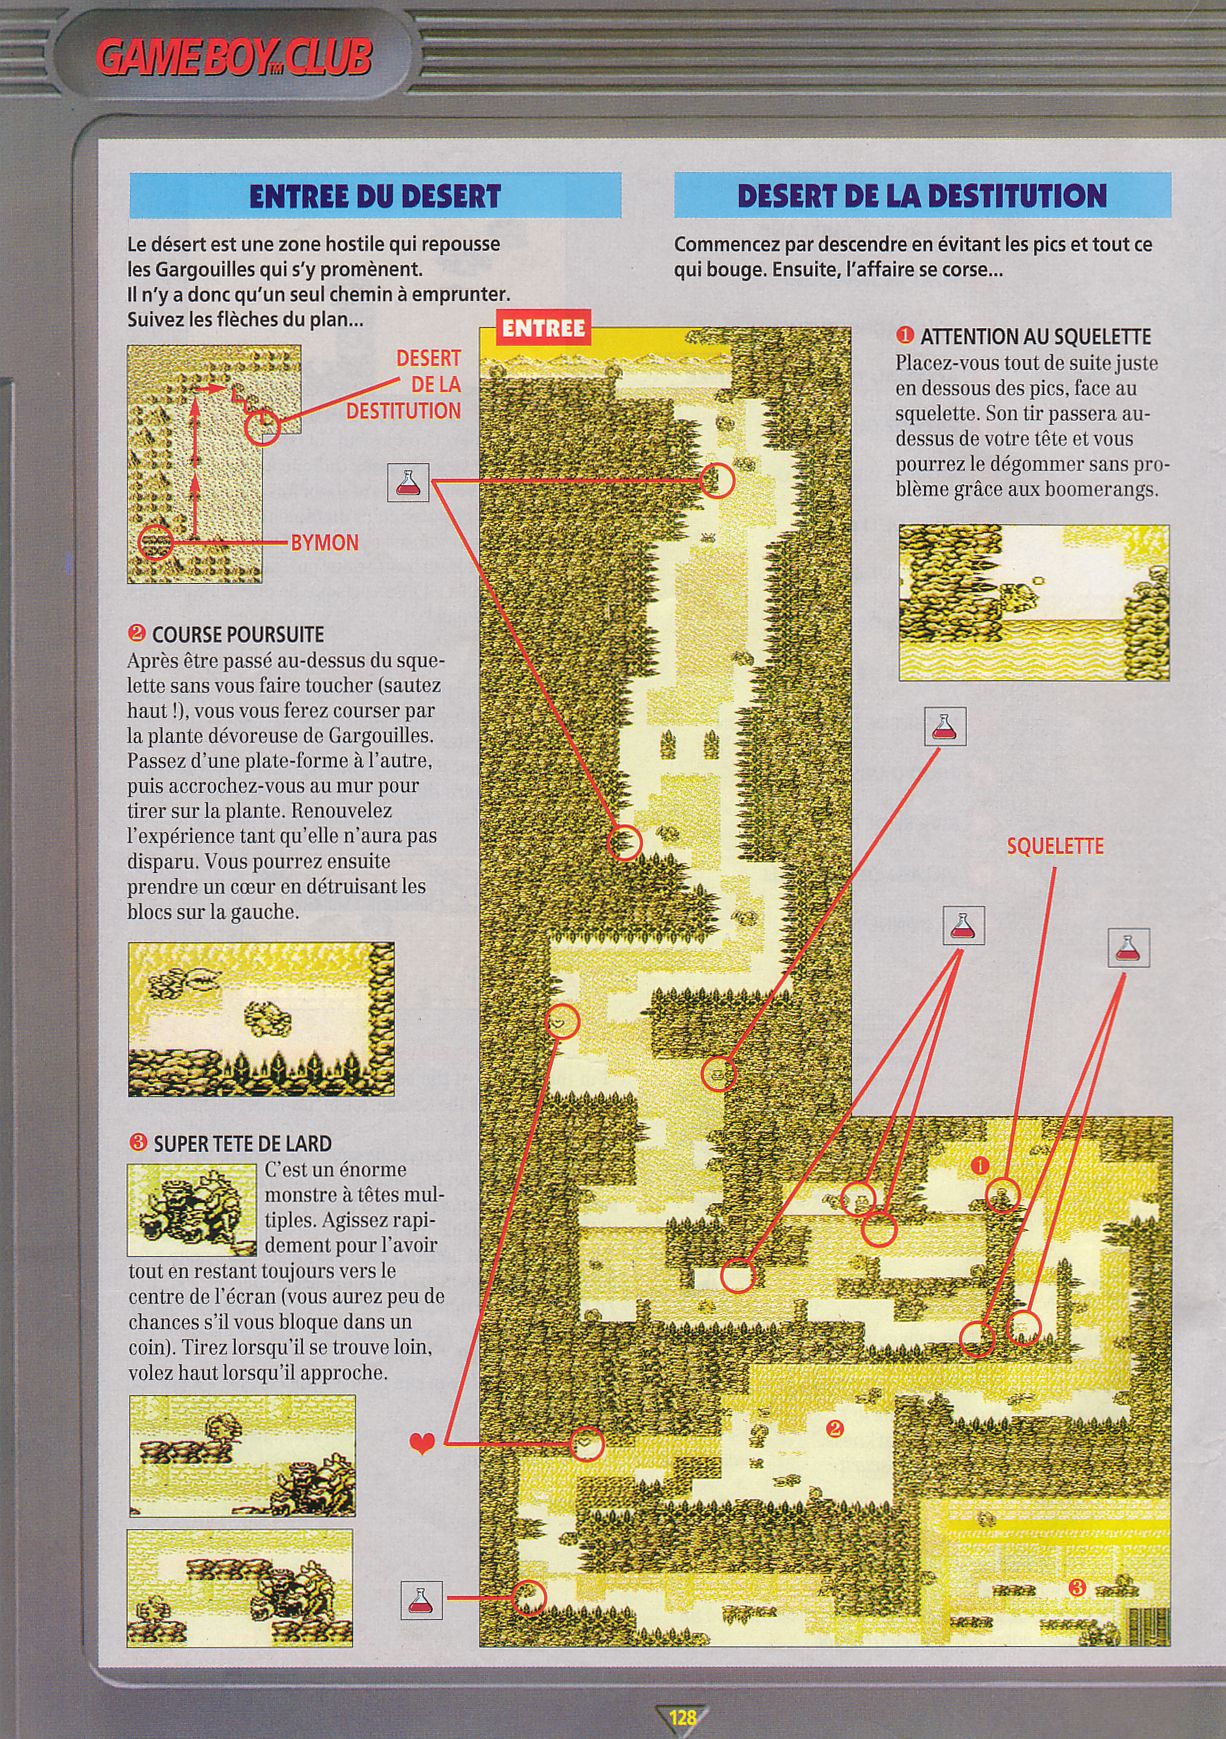 tests//1155/Nintendo Player 007 - Page 128 (1992-11-12).jpg